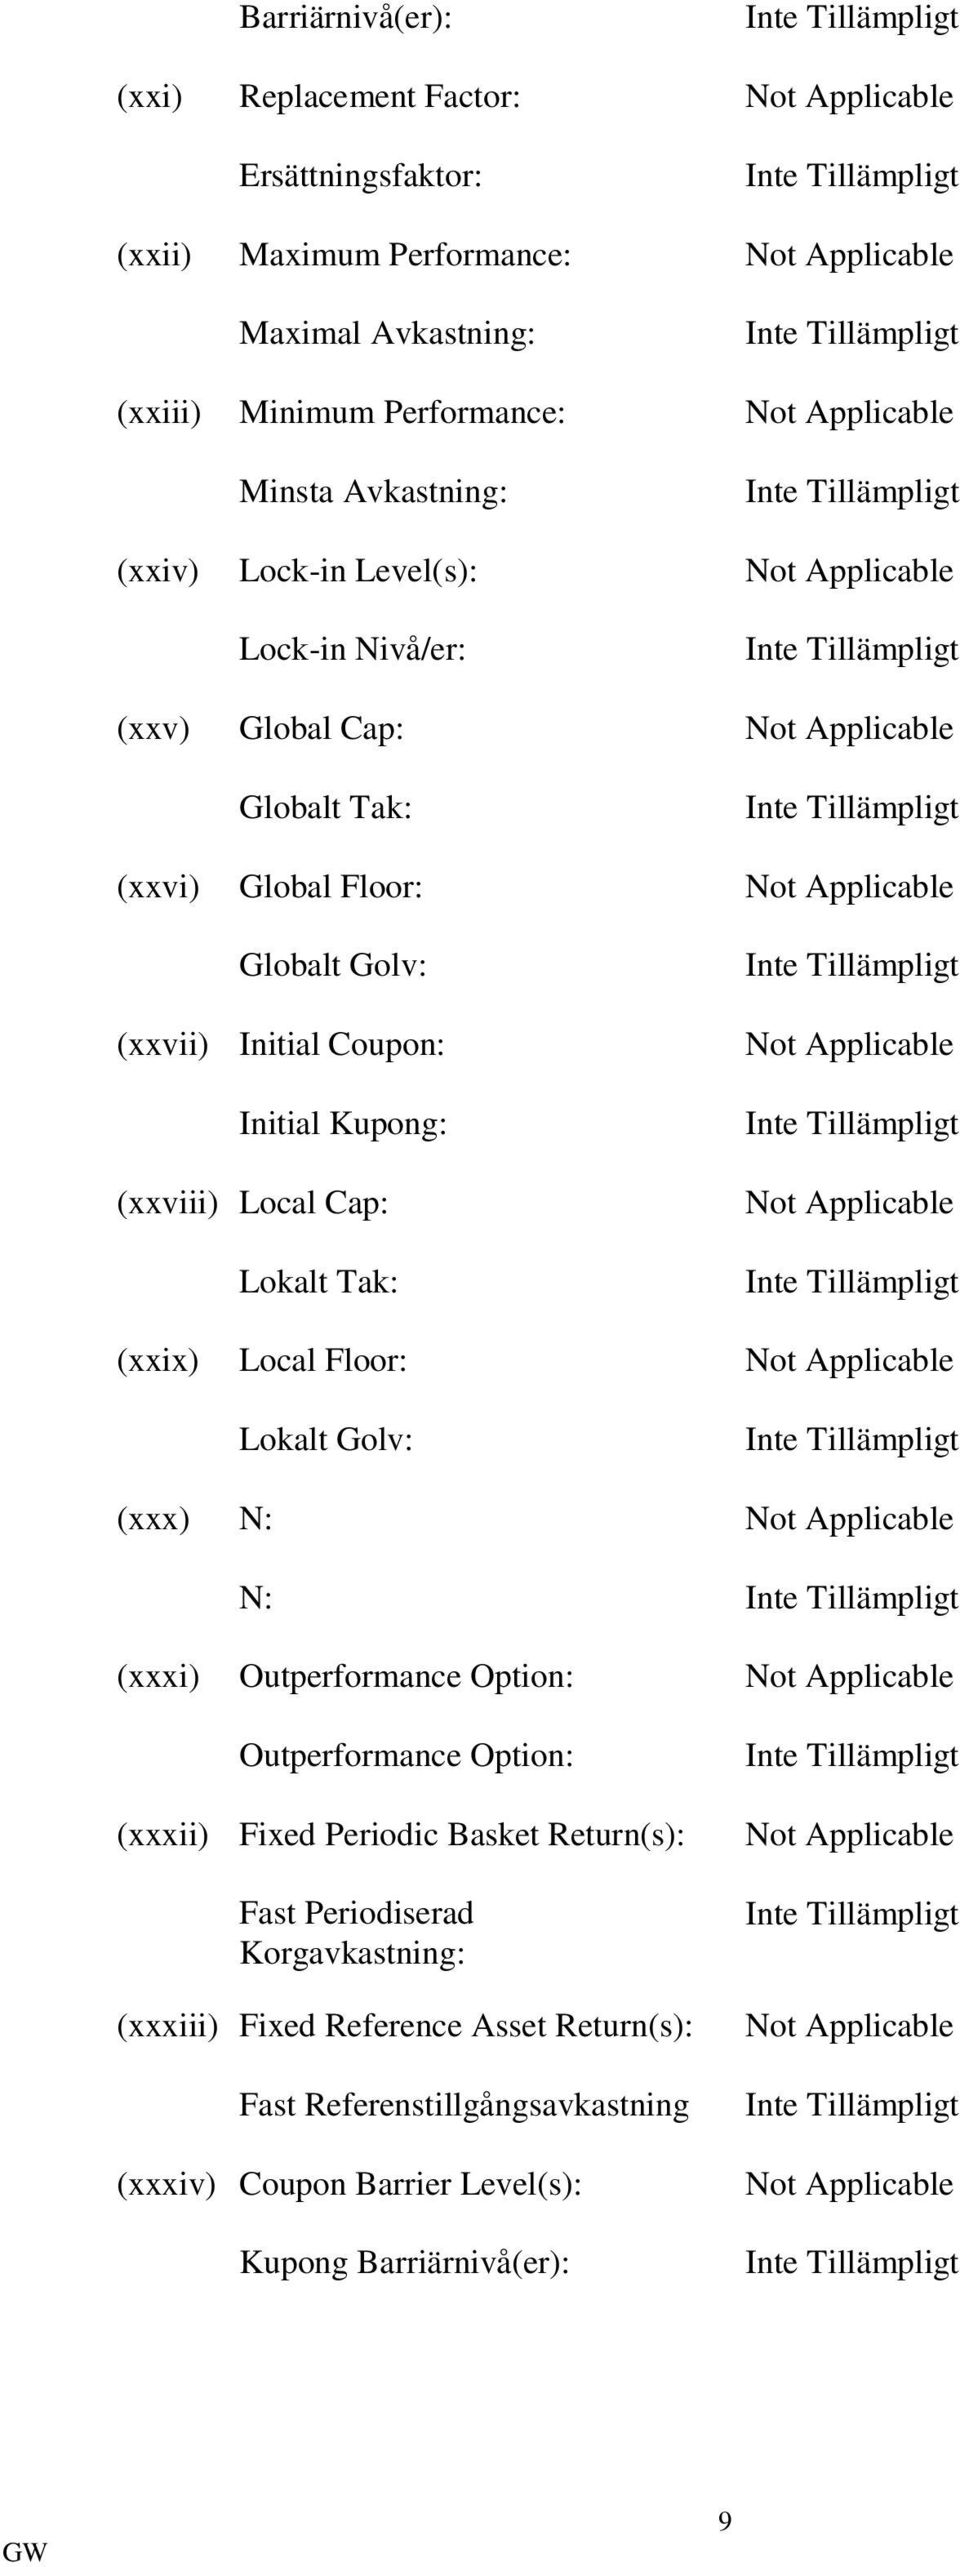 Kupong: (xxviii) Local Cap: Lokalt Tak: Not Applicable Not Applicable (xxix) Local Floor: Not Applicable Lokalt Golv: (xxx) N: Not Applicable N: (xxxi) Outperformance Option: Not Applicable